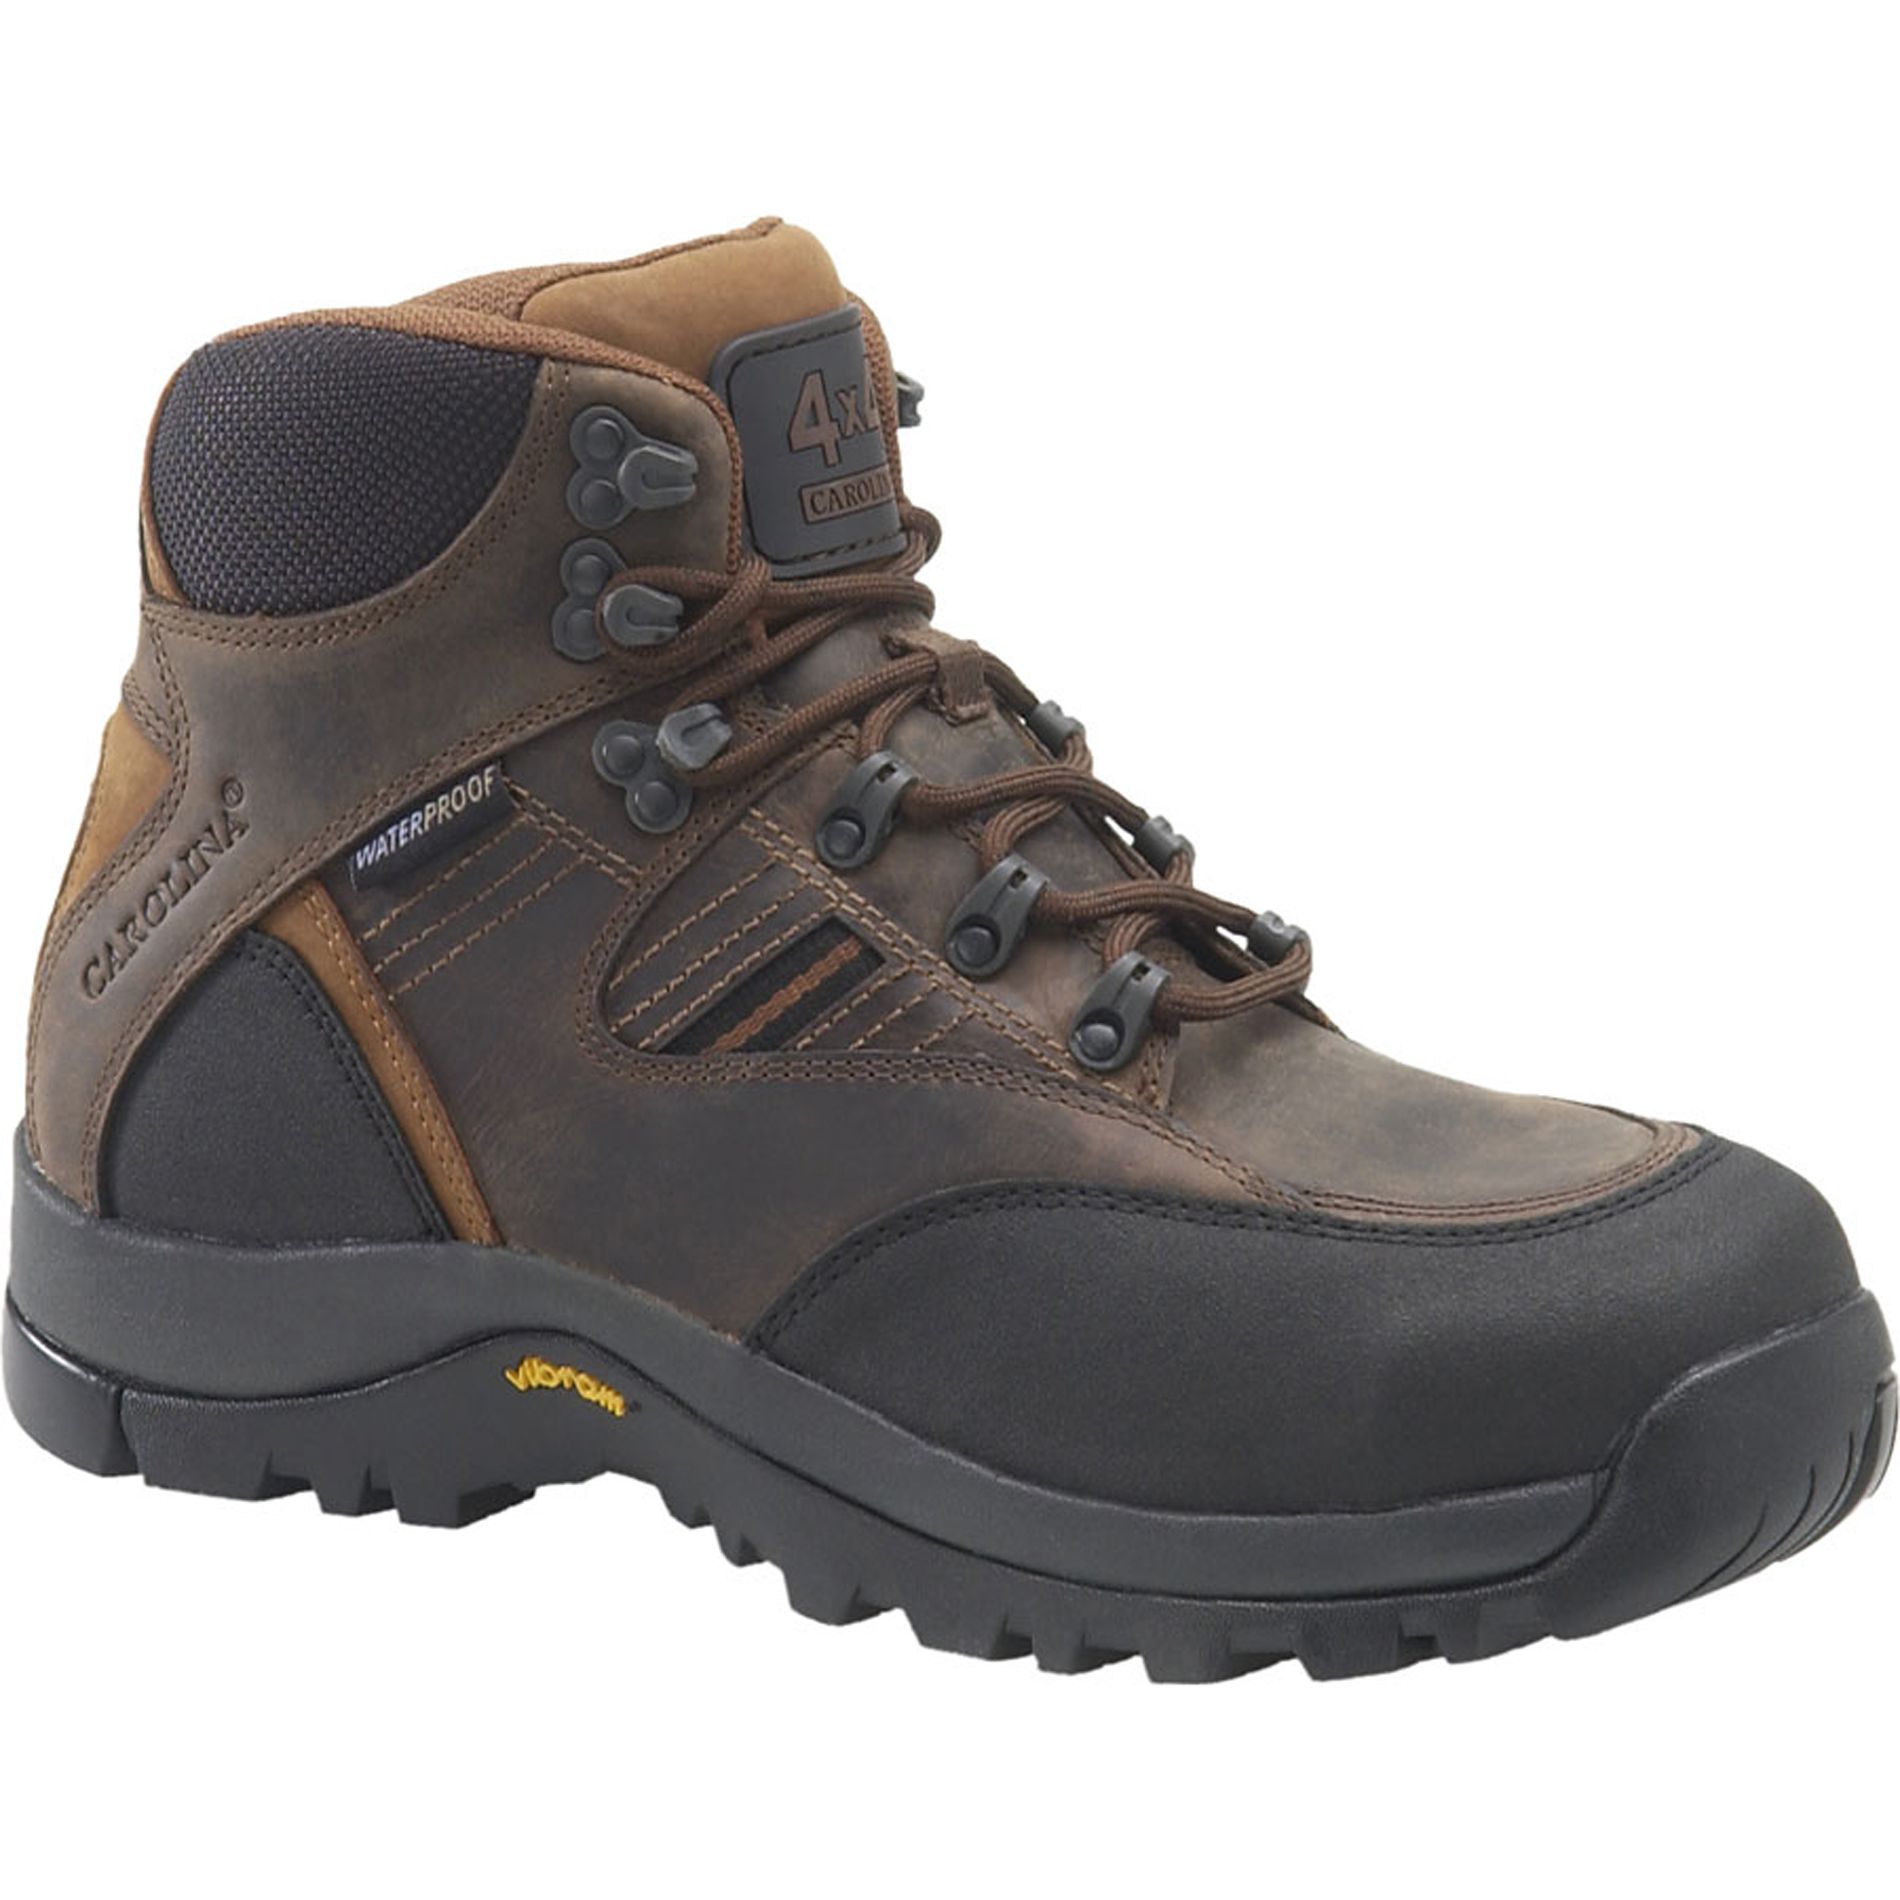 Carolina Shoe Company Men's Steel Toe Waterproof Hiker Boot CA8503 - Copper Crazyhorse